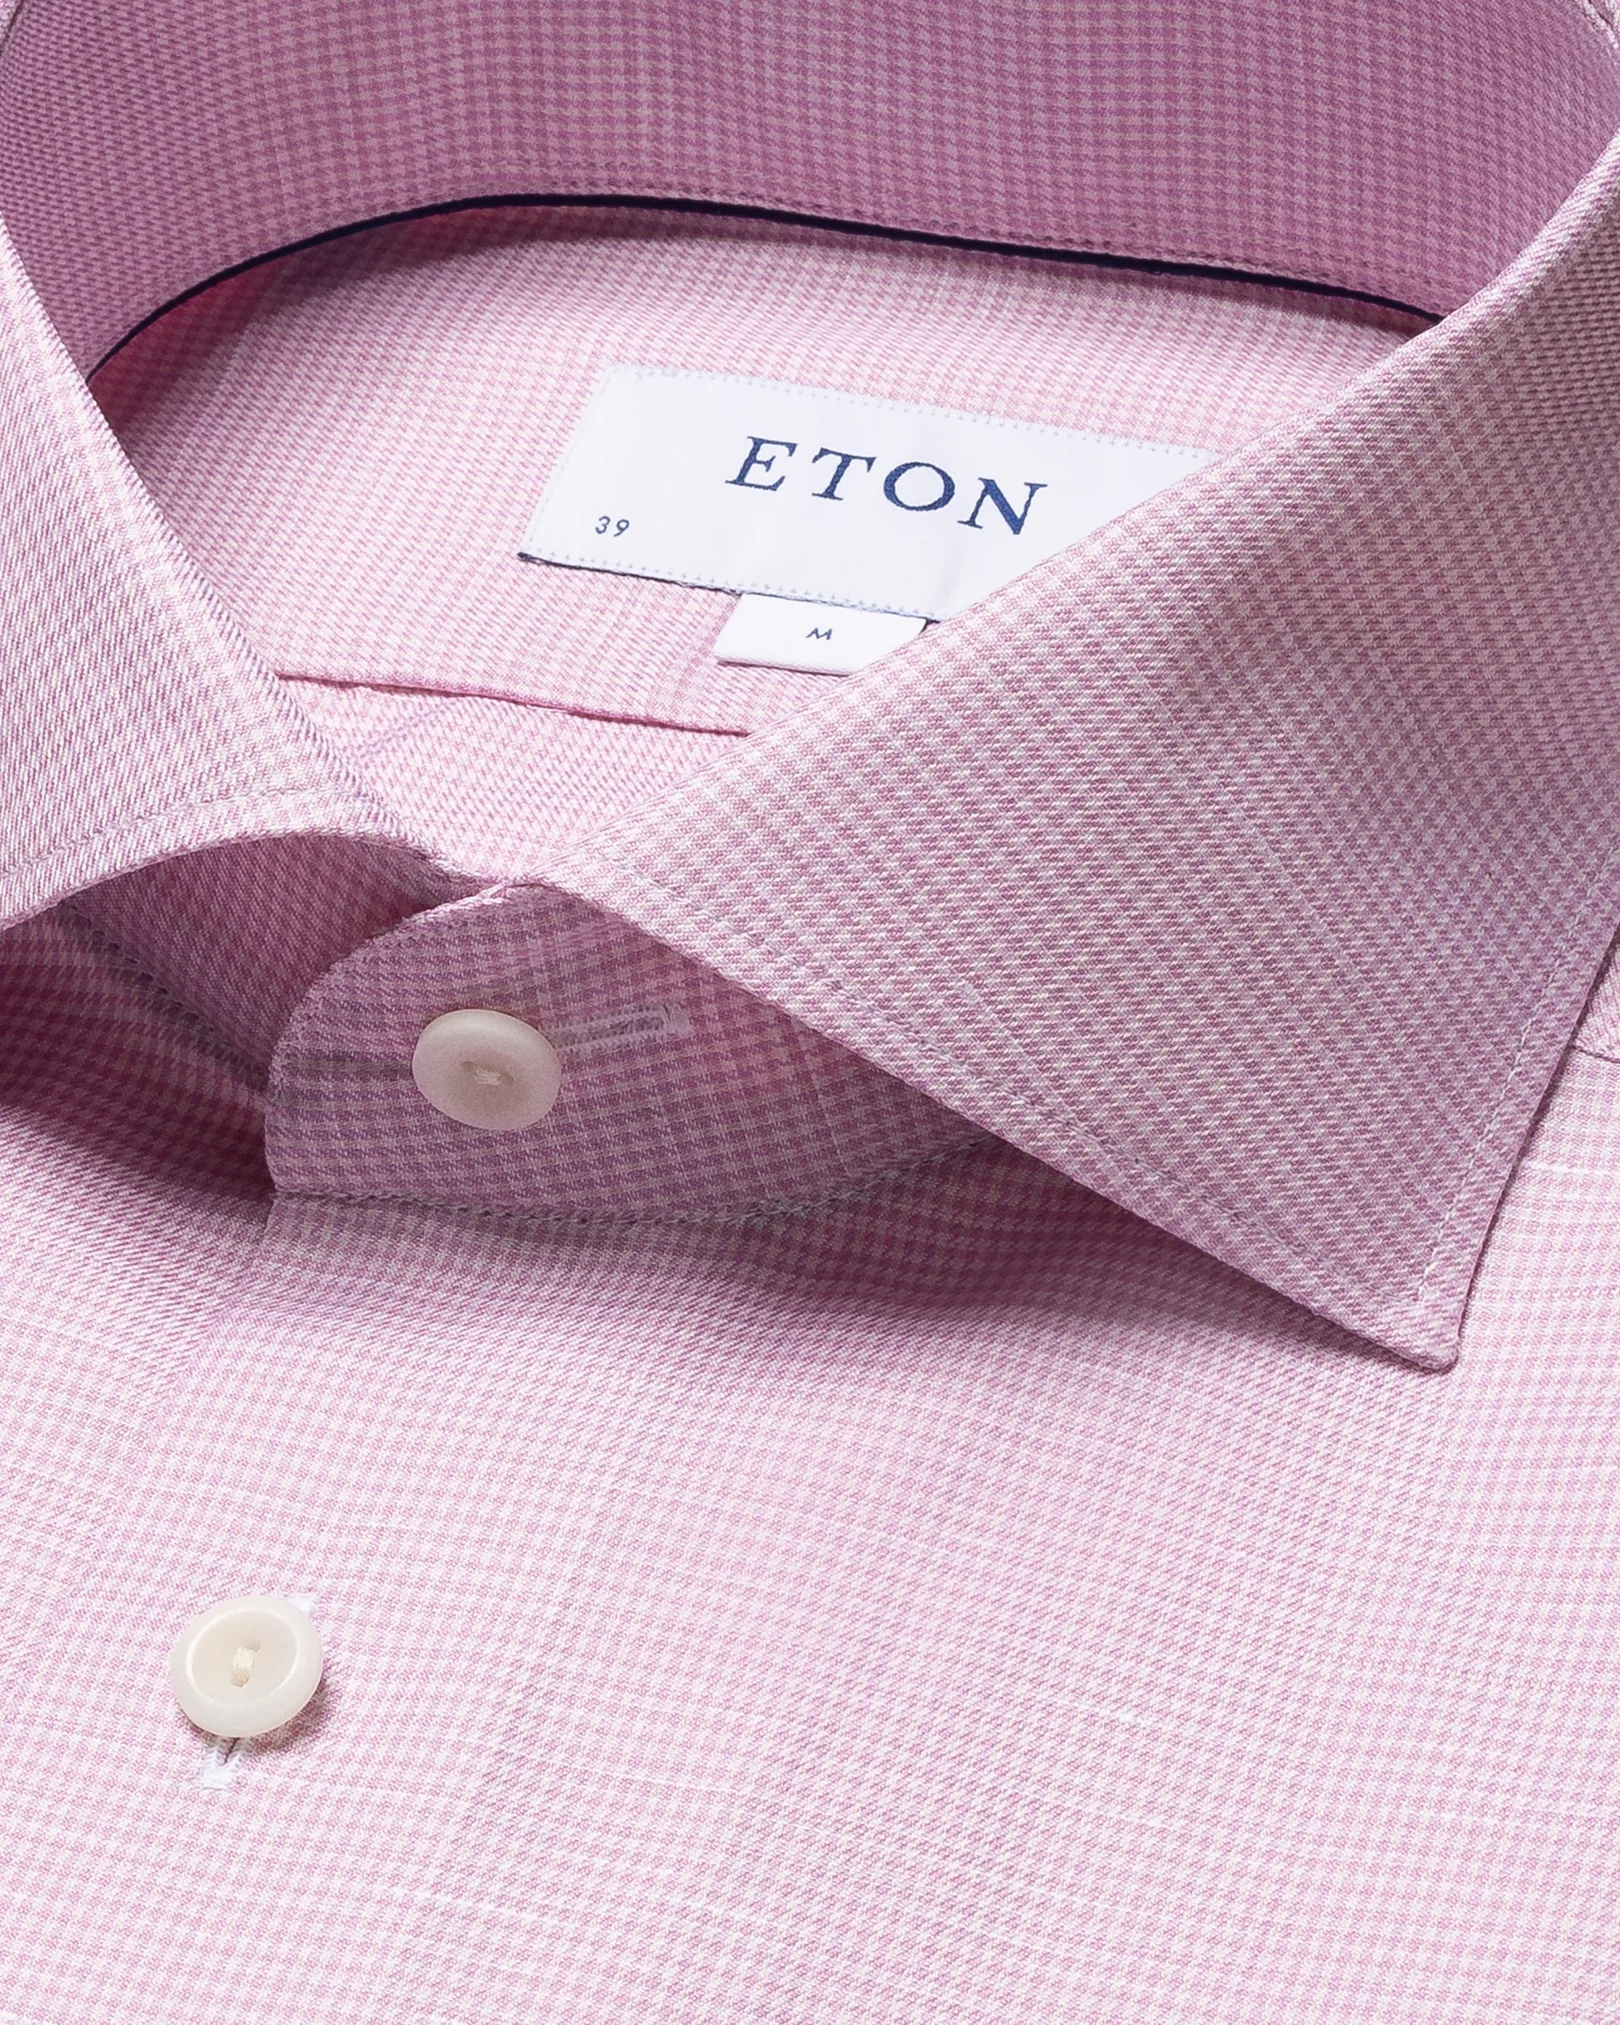 Eton - pink wrinkle free cotton linen